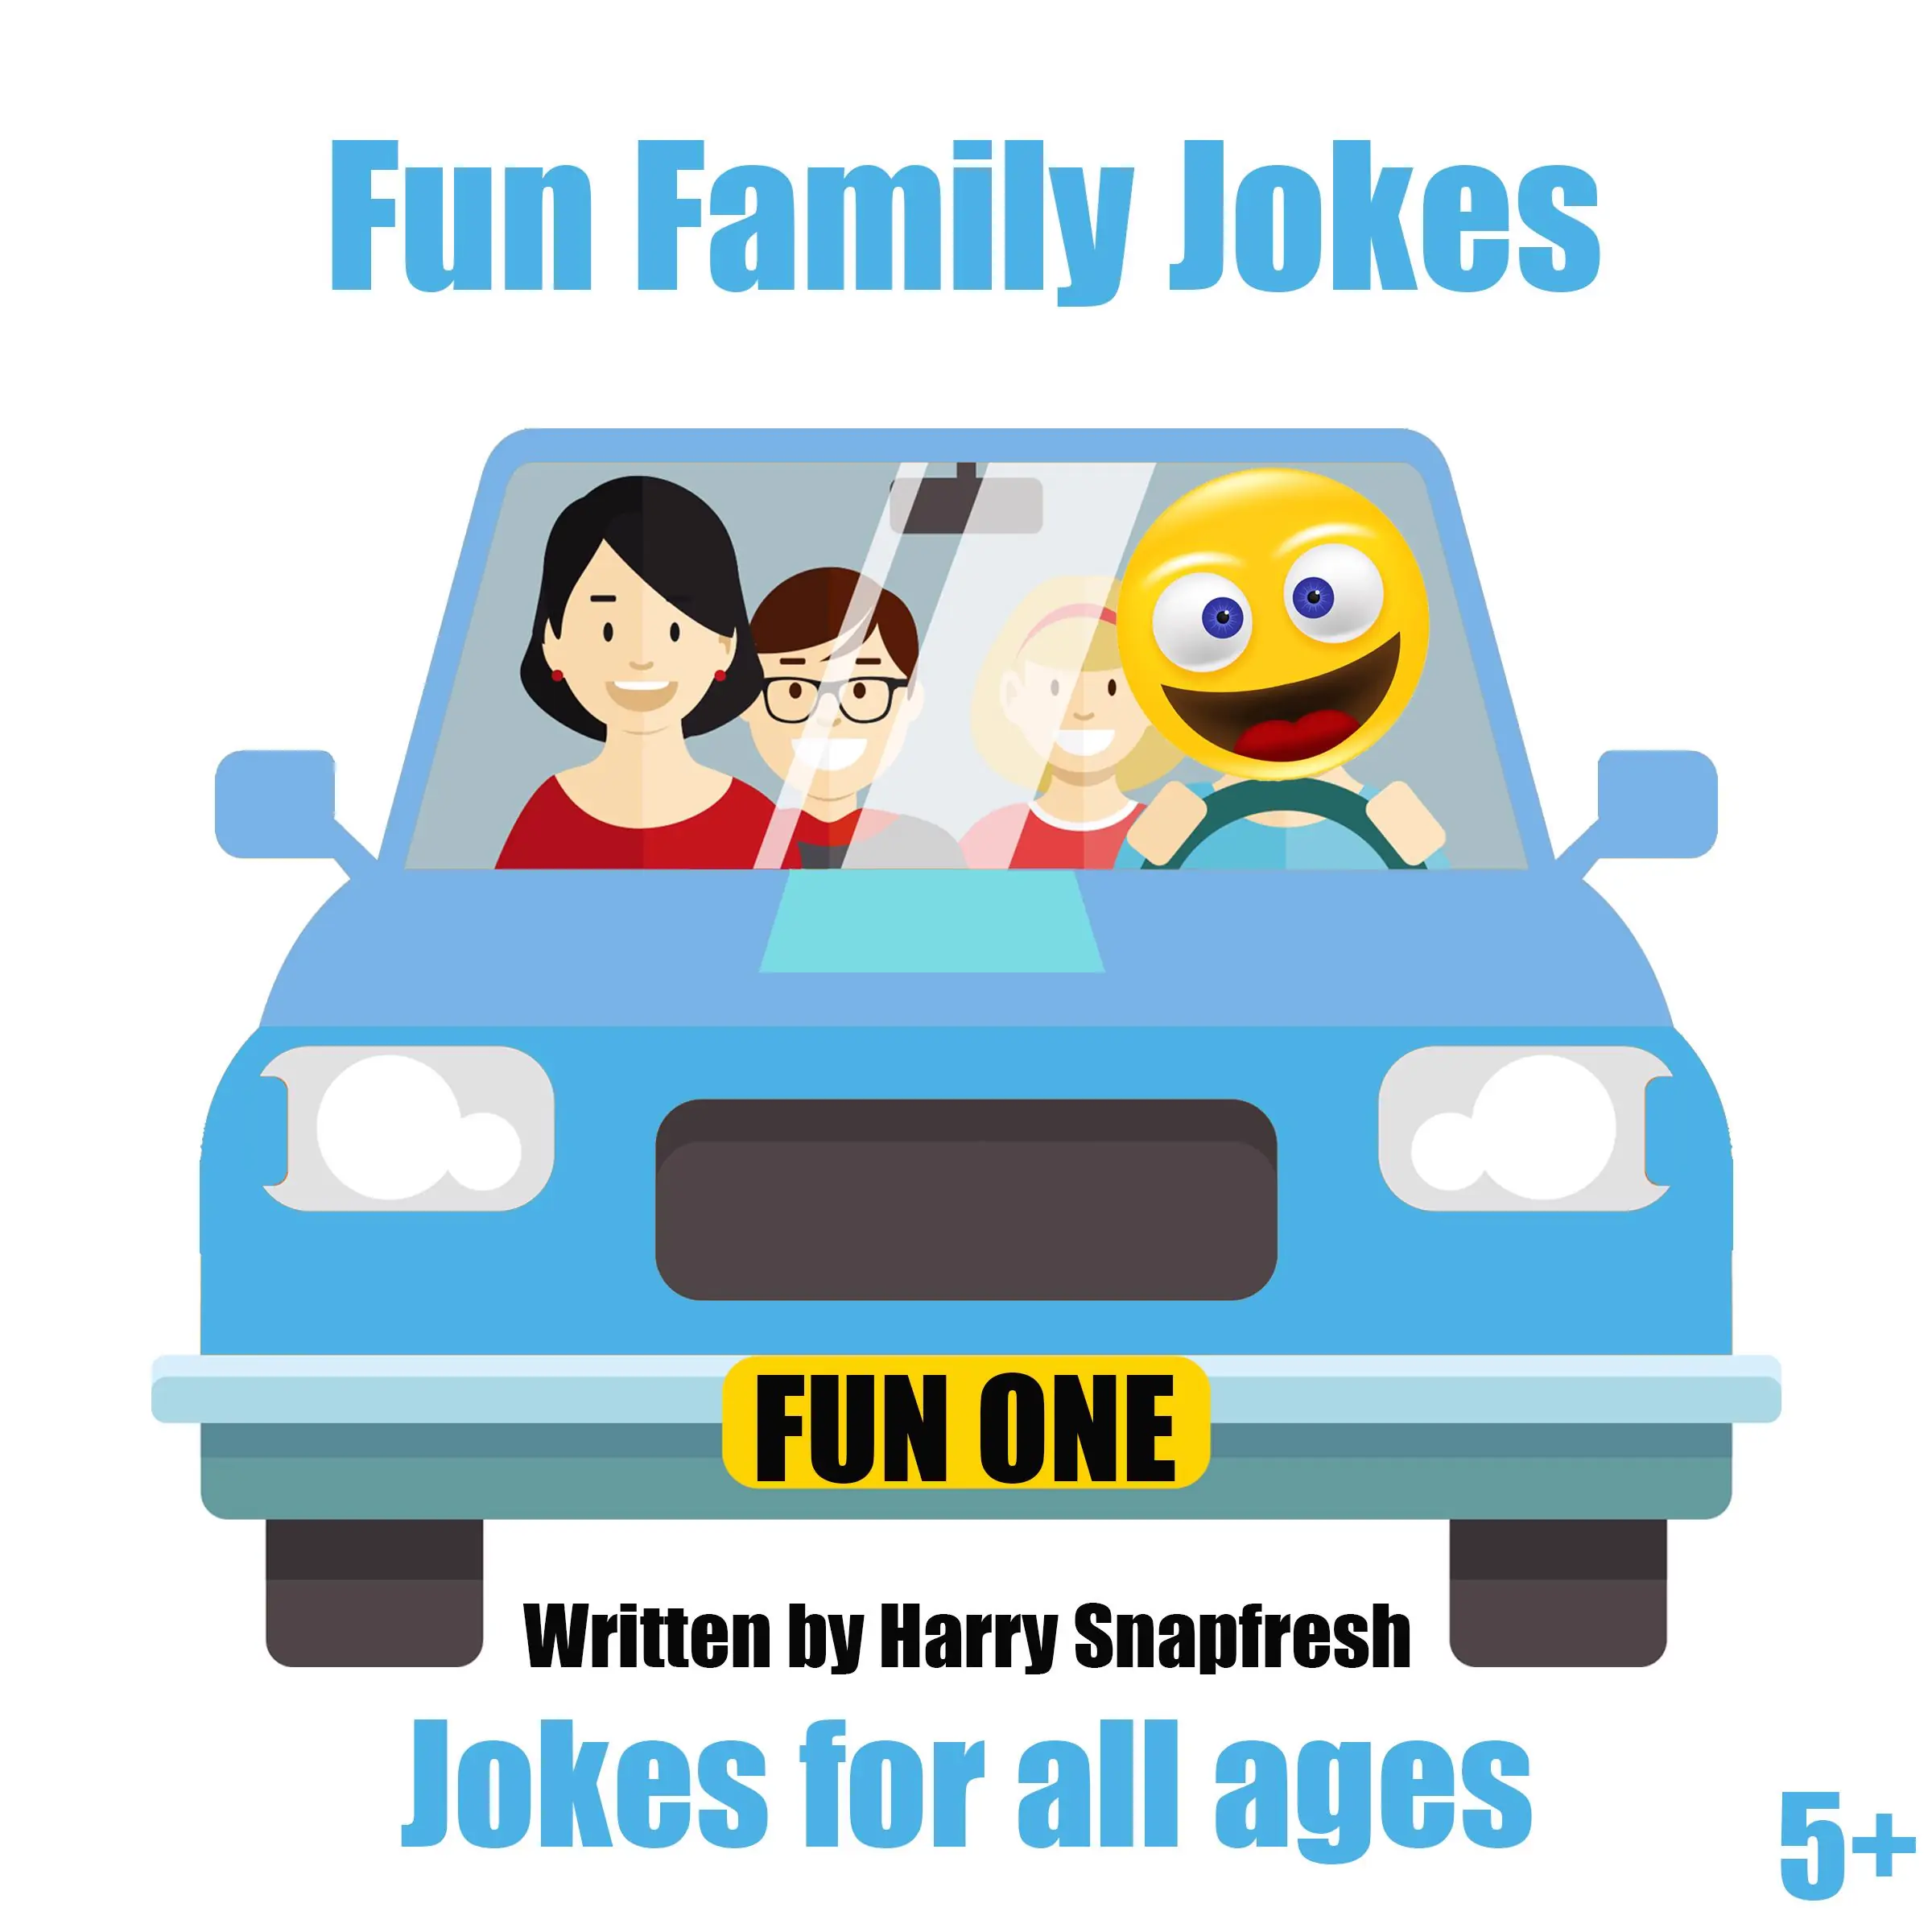 Fun Family Jokes: Jokes for All Ages by Harry Snapfresh Audiobook